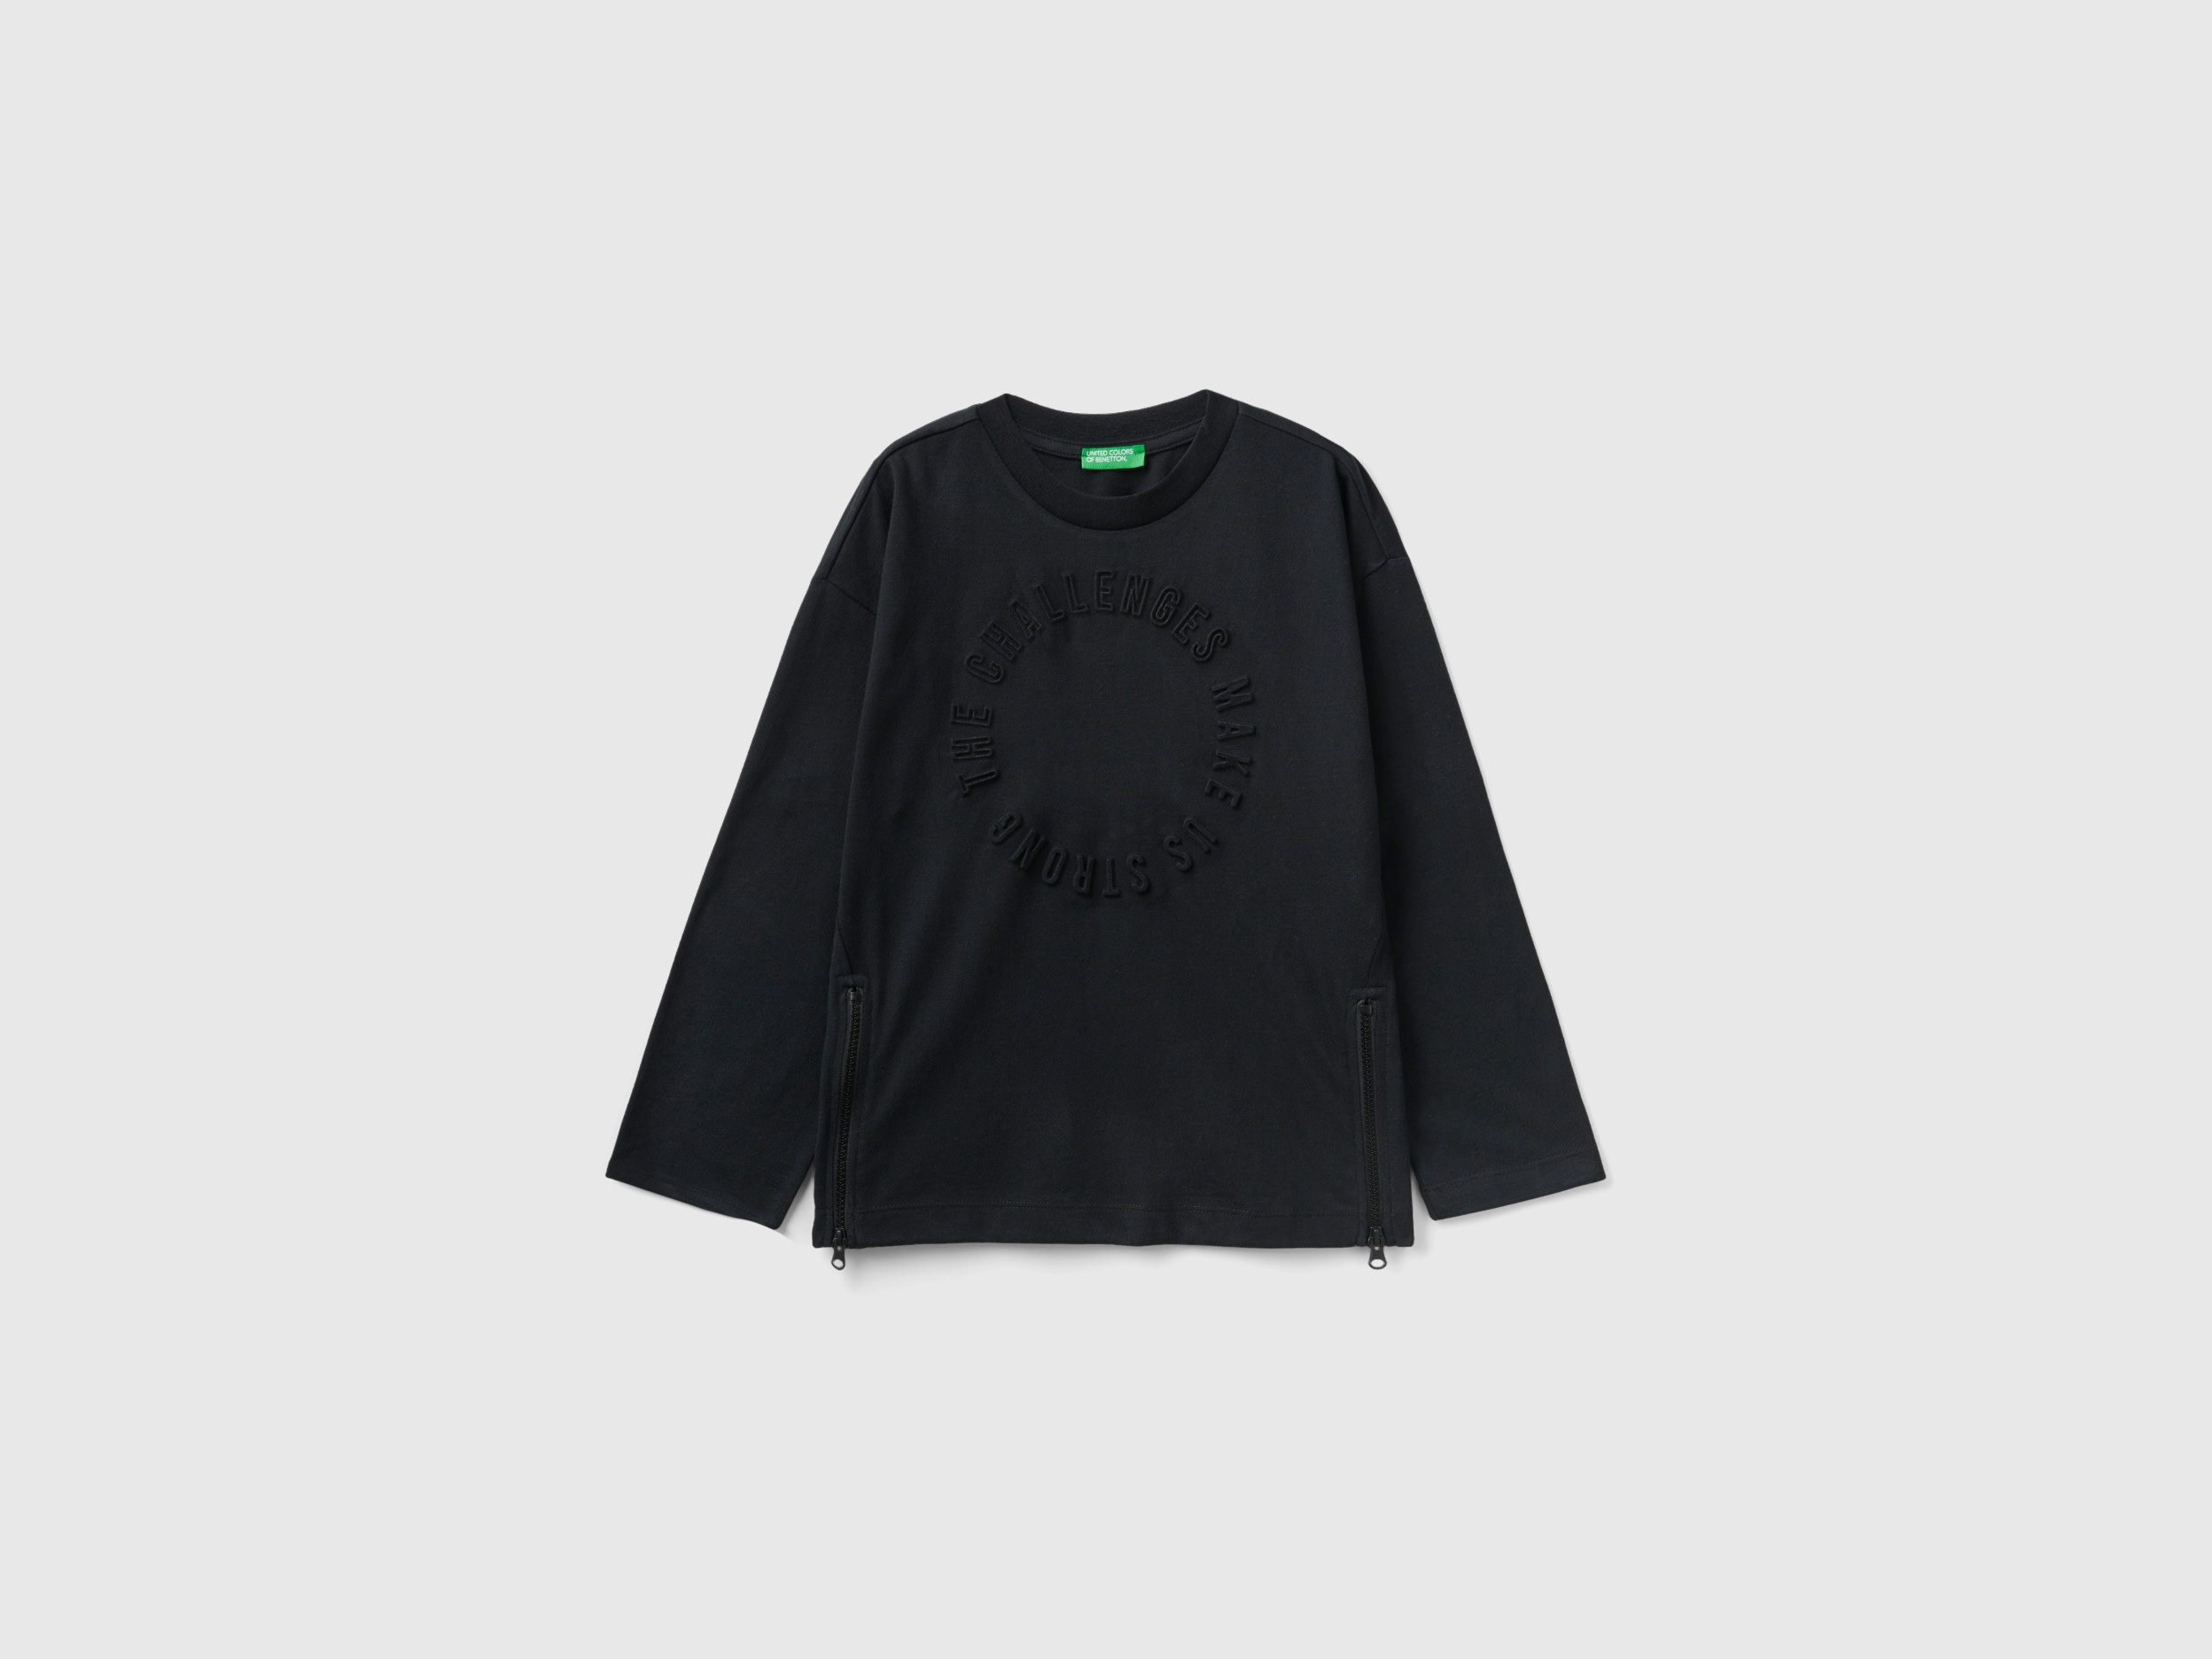 Benetton, Oversized Fit Sweatshirt With Embossed Print, size 3XL, Black, Kids